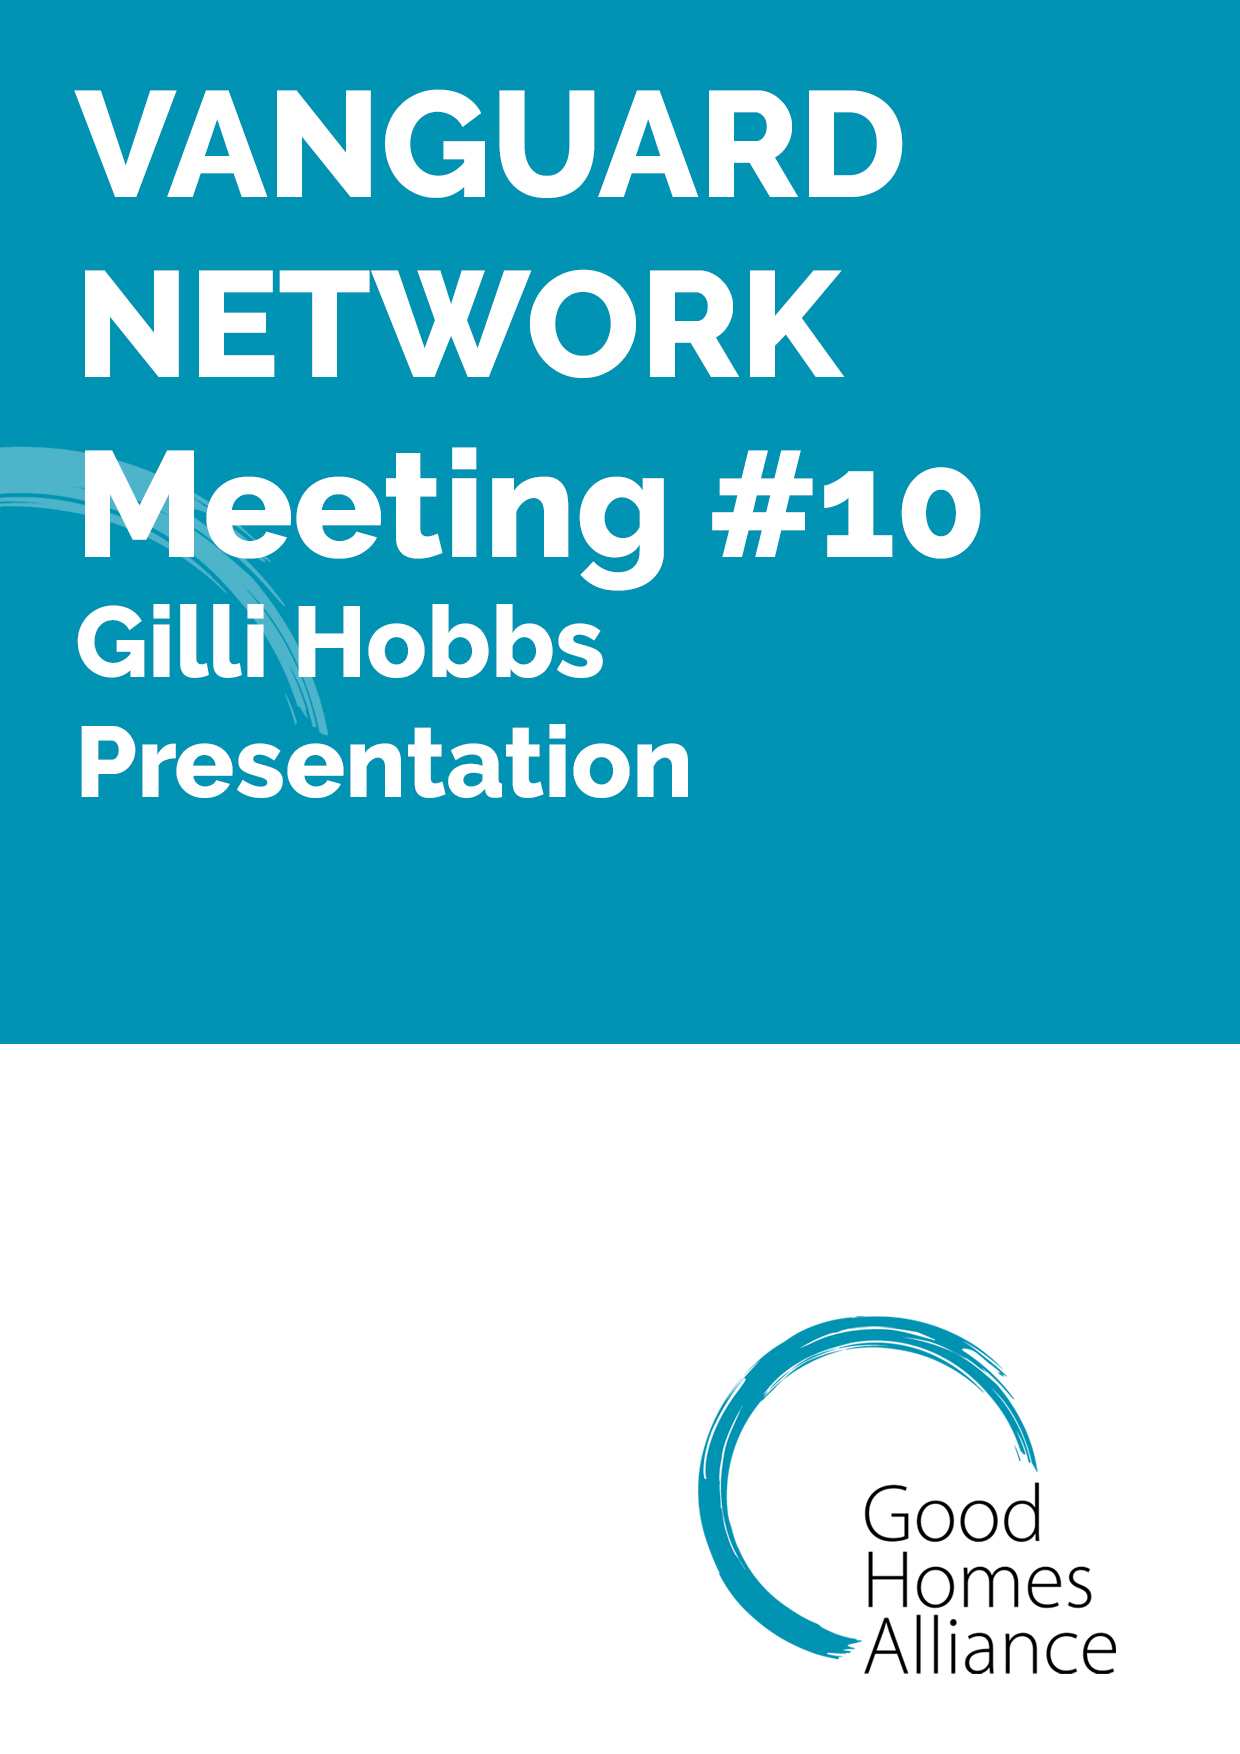 Vanguard Network meeting #10 - Gilli Hobbs presentation on circular economy